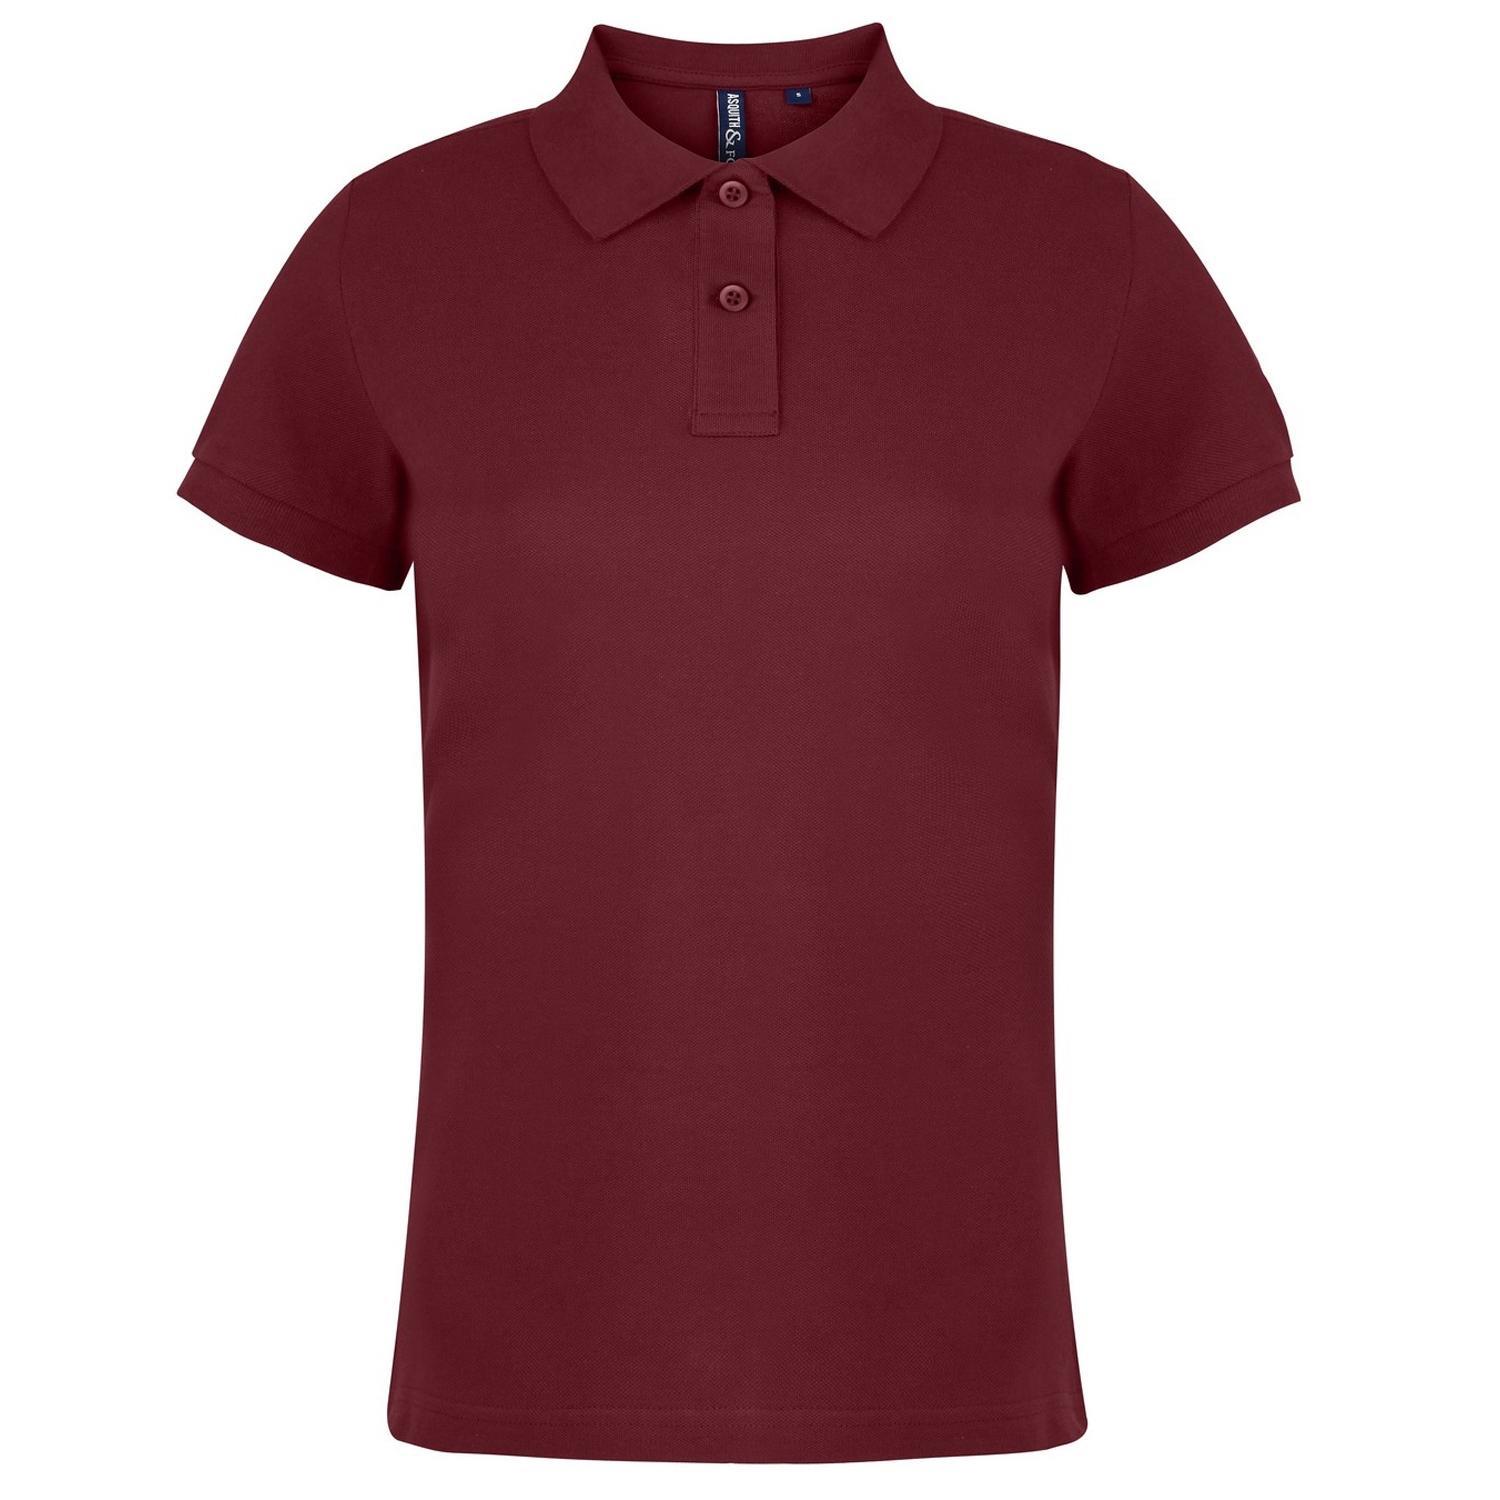 Asquith & Fox Womens/Ladies Plain Short Sleeve Polo Shirt (Burgundy) (L)